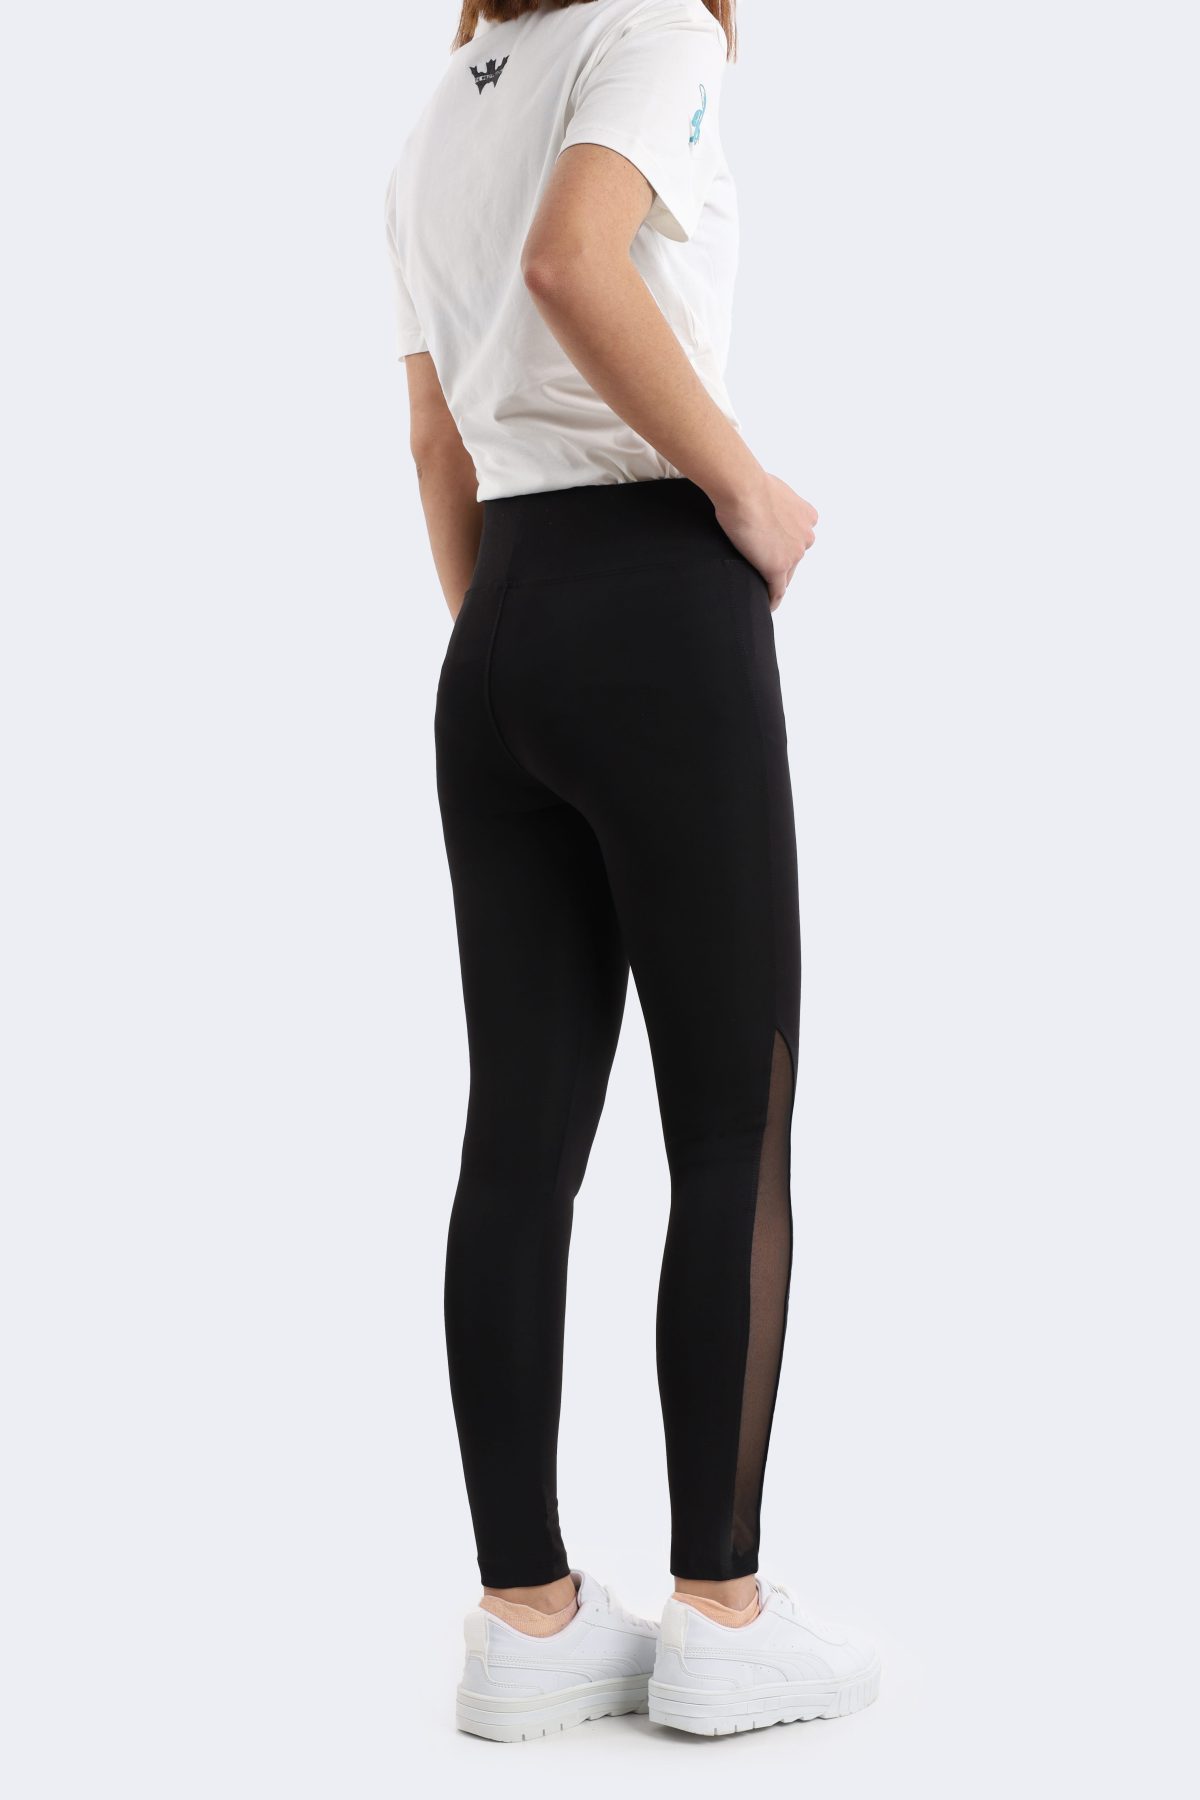 Women's tights – Black-4420